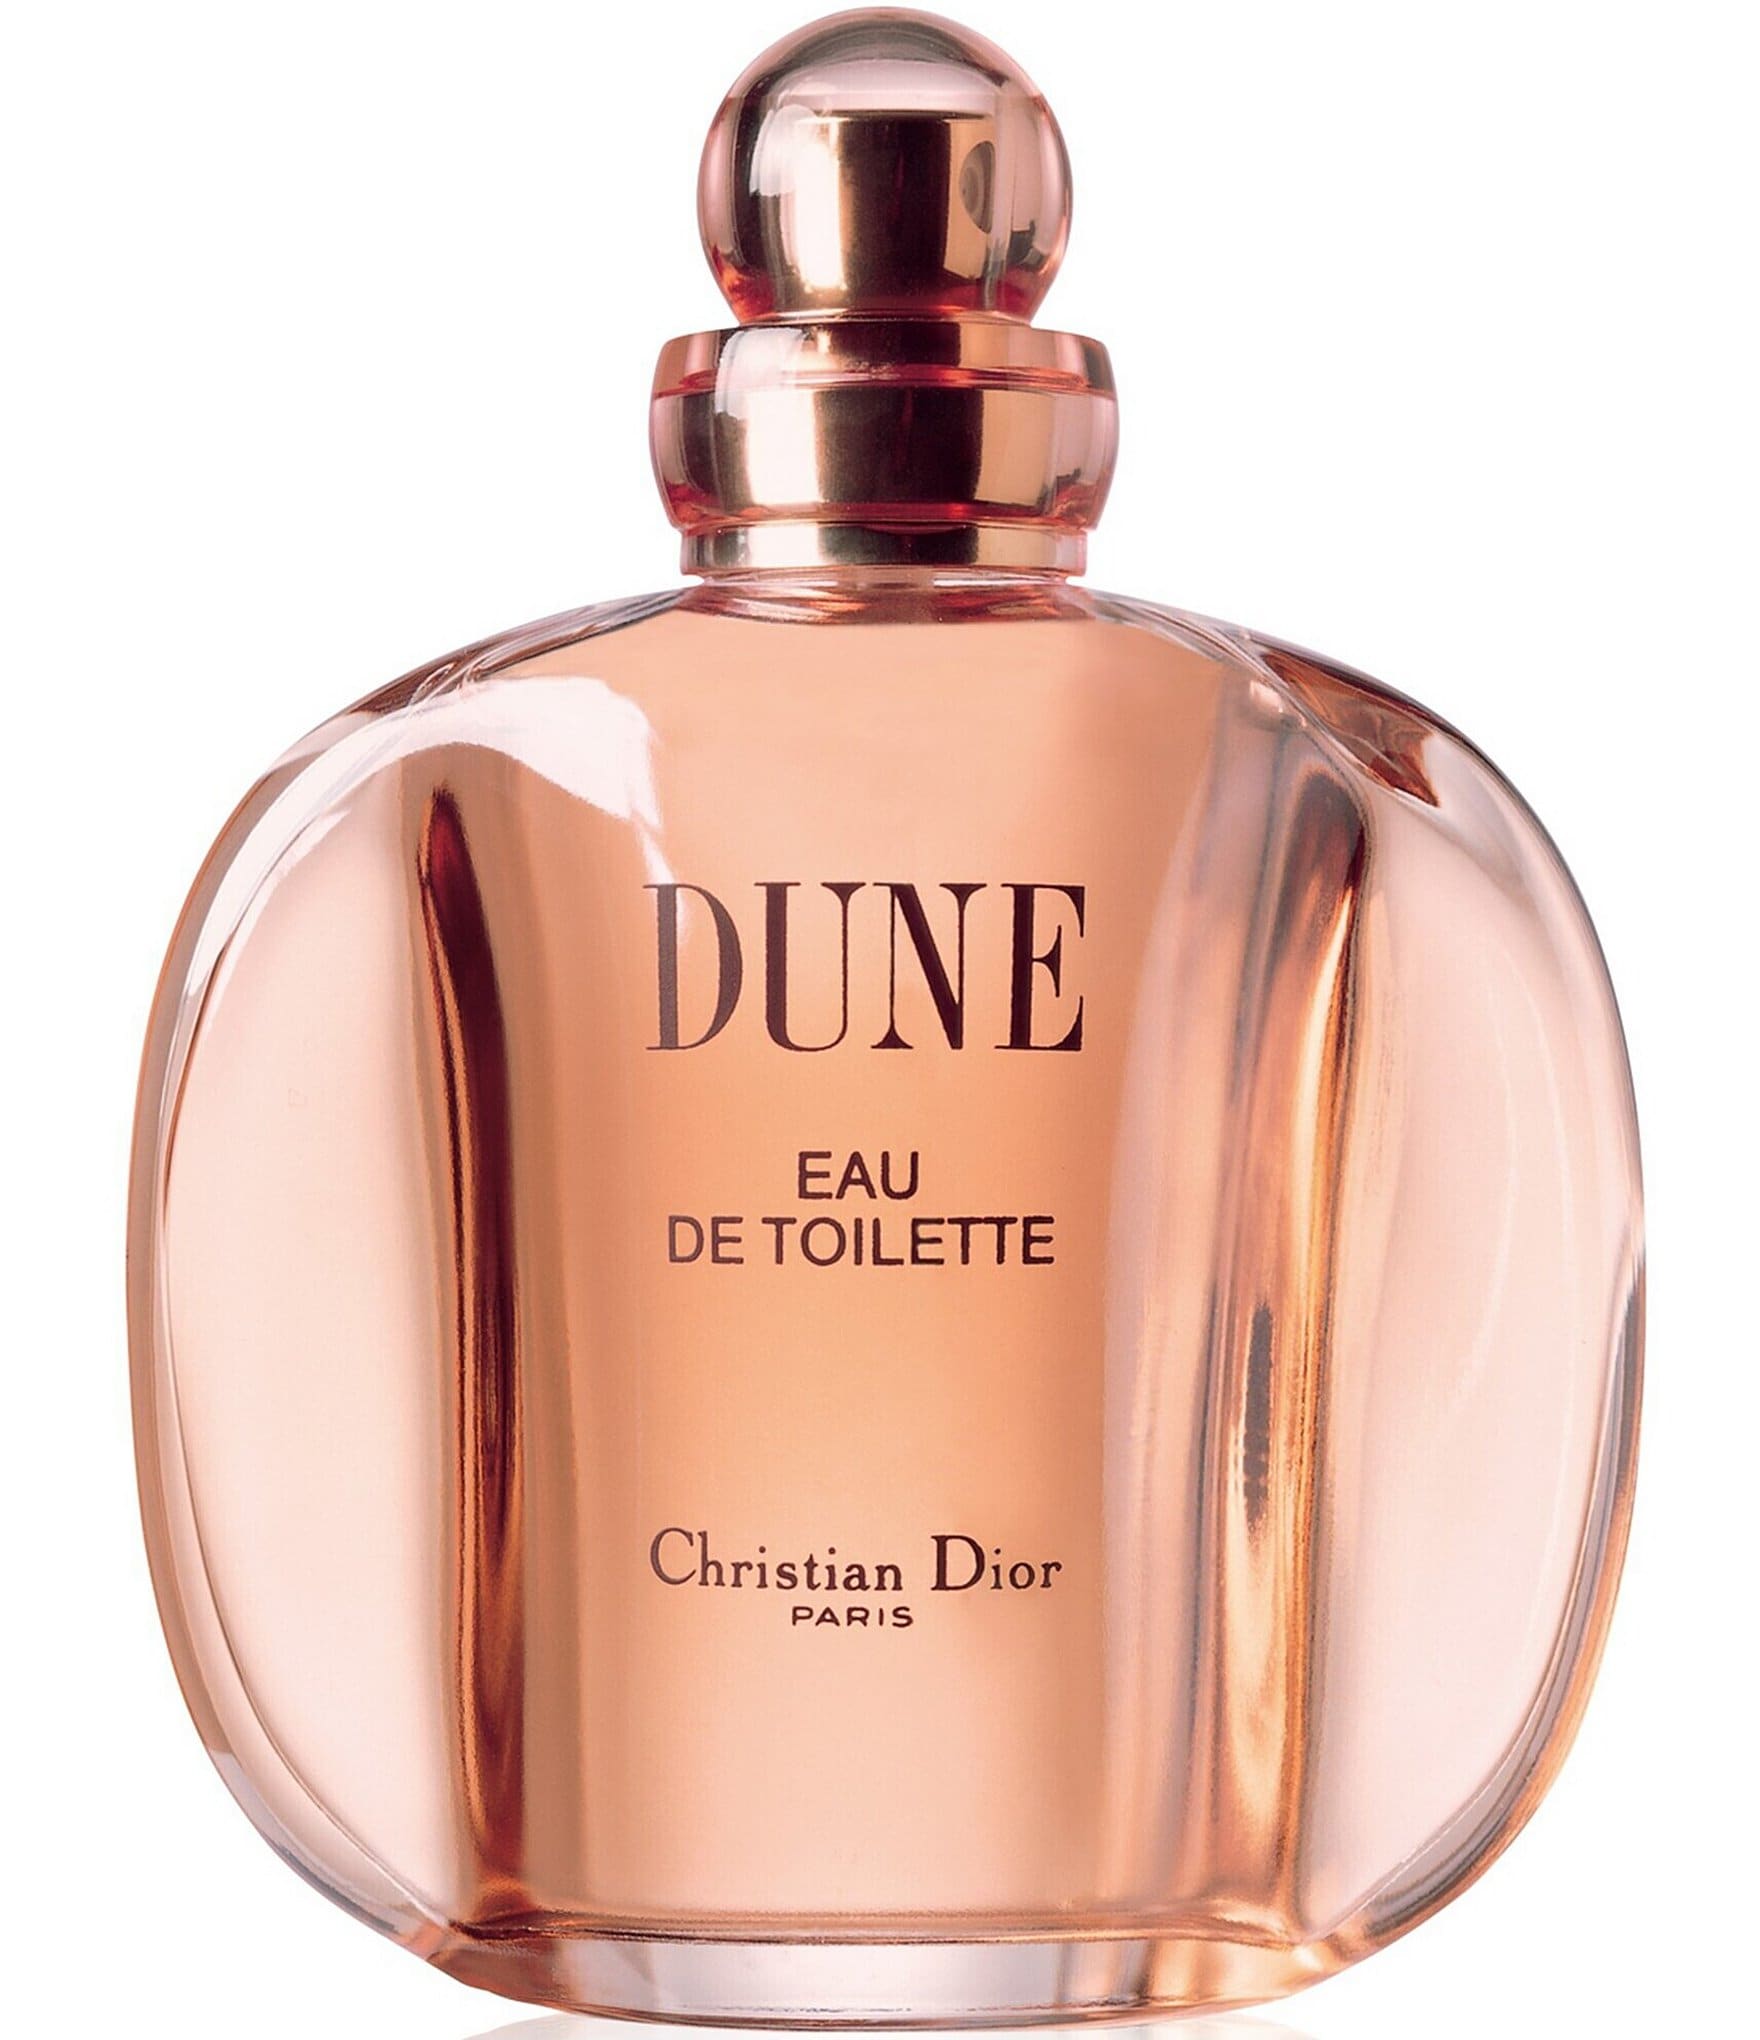 Dune by Christian Dior 3.4 oz Eau de Toilette Spray / Women